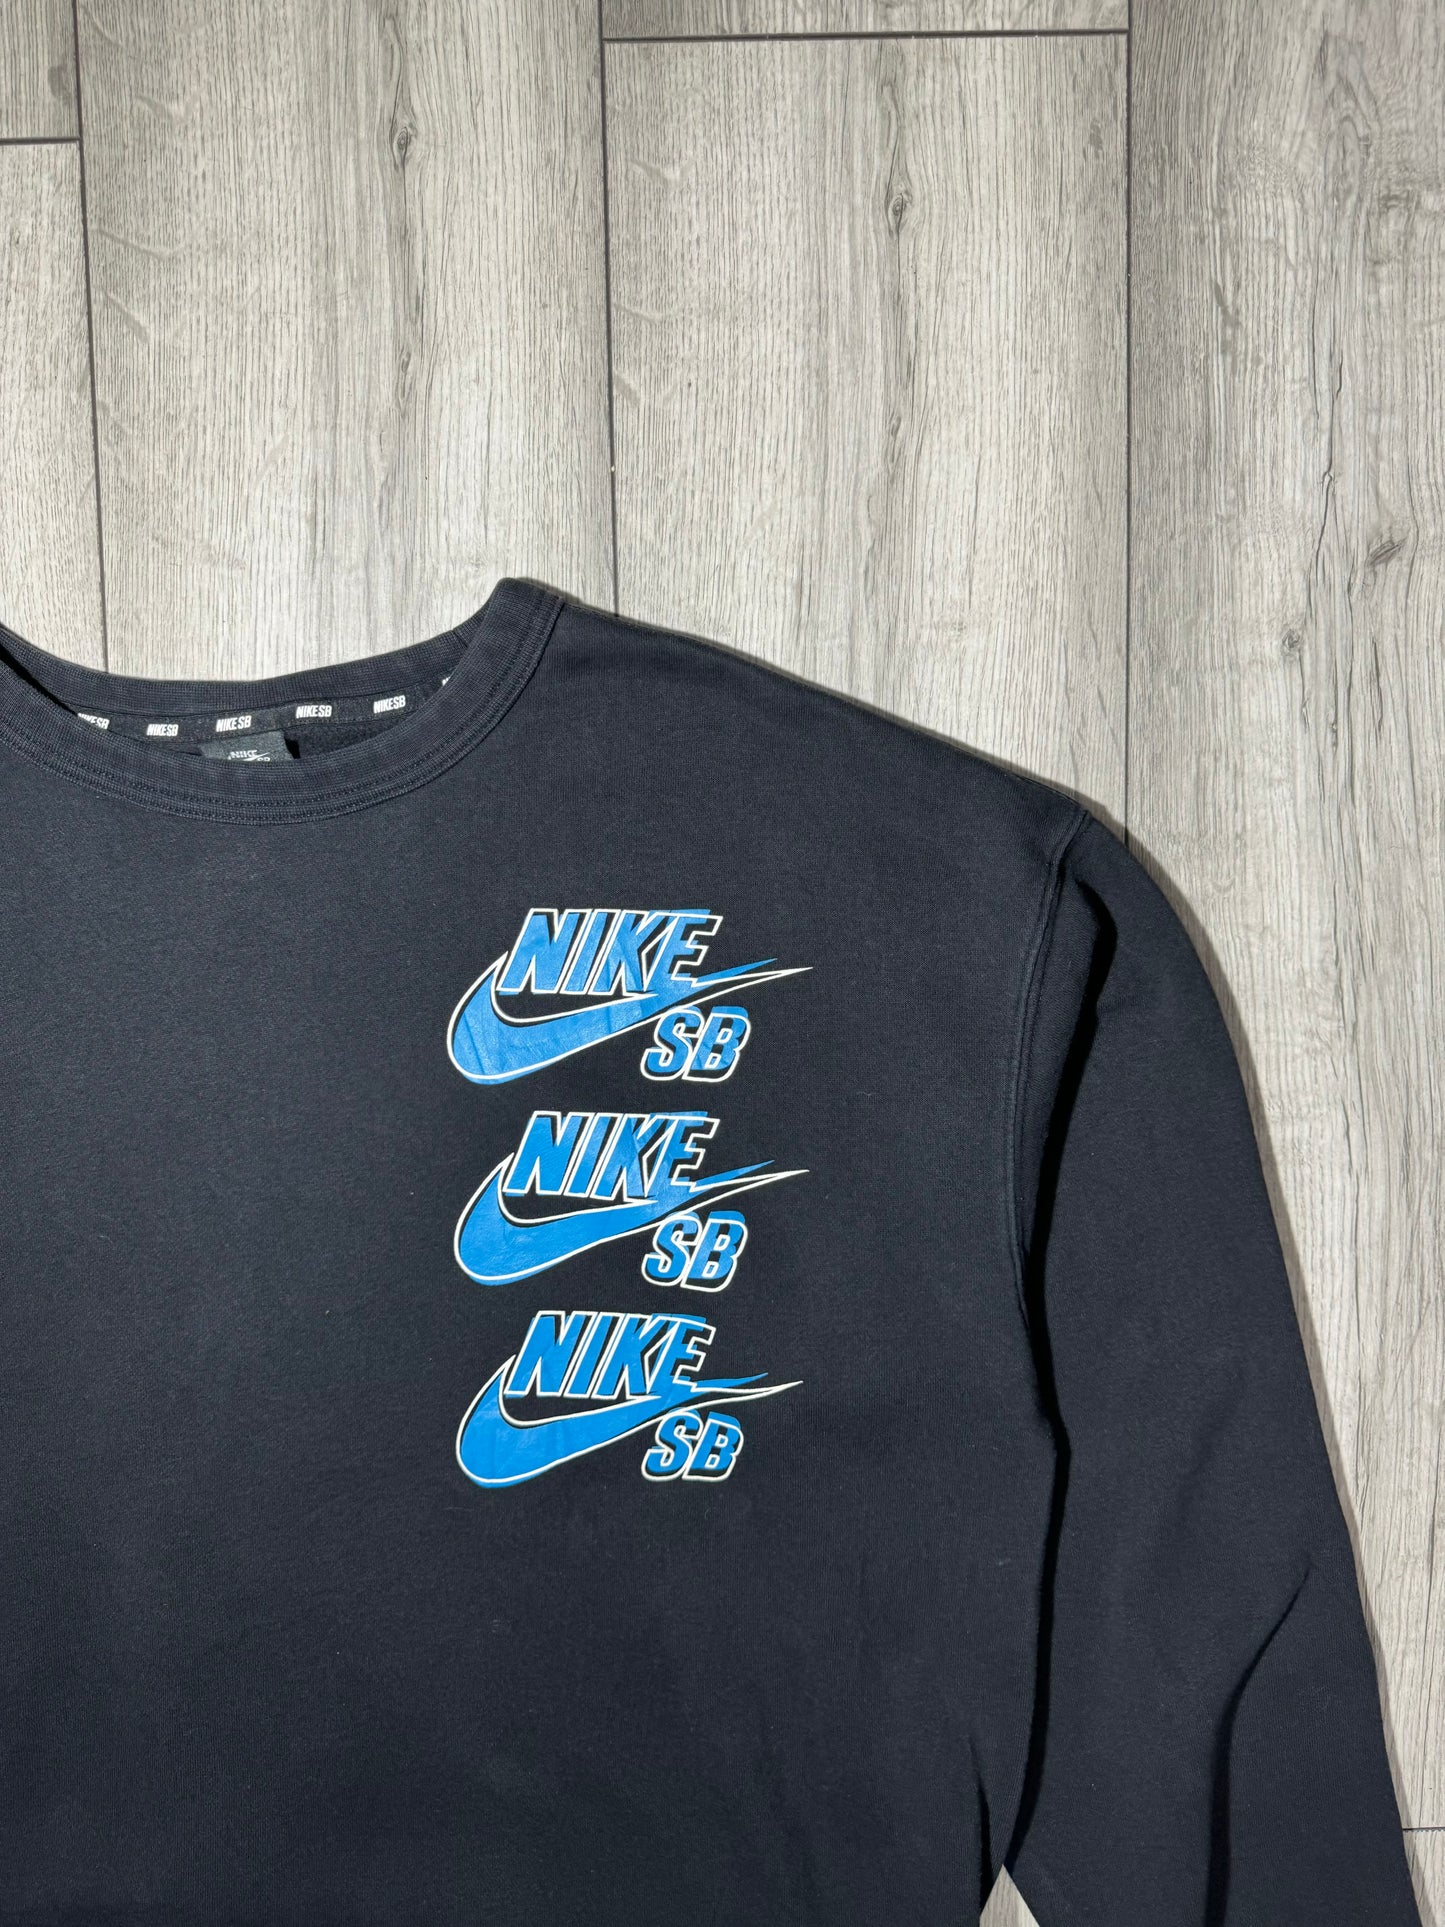 Black Nike SB Sweatshirt